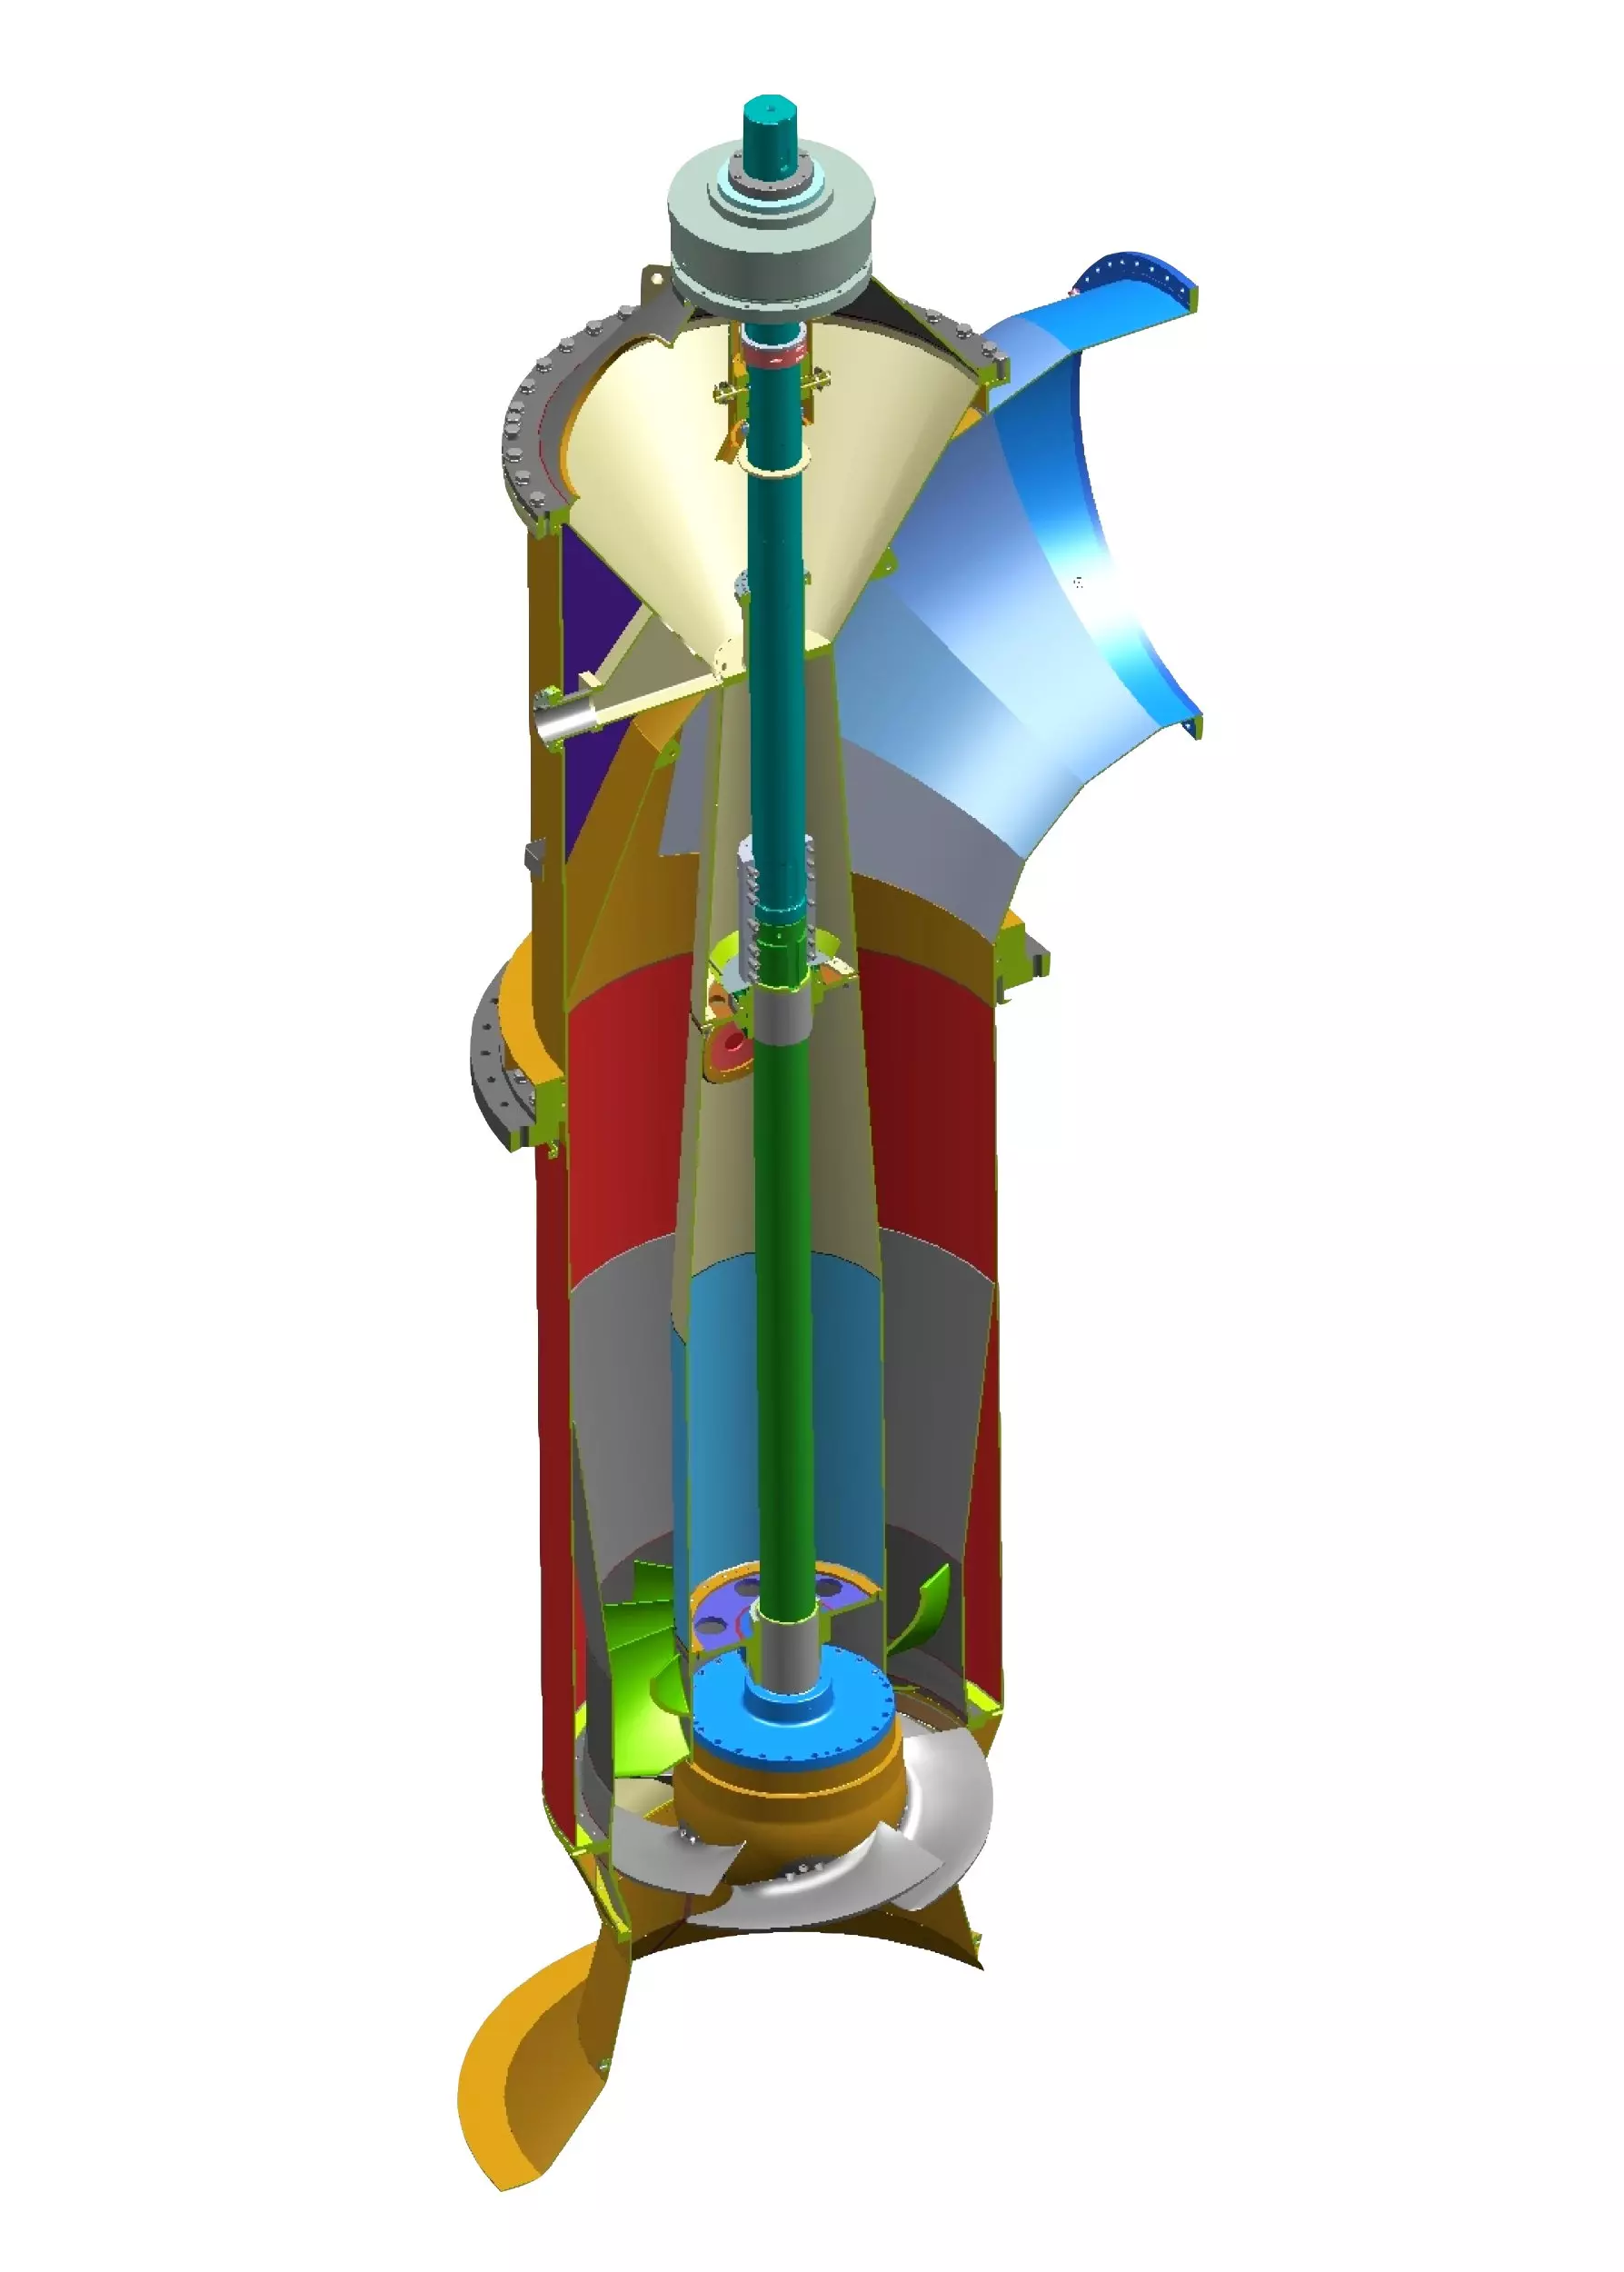 Pump assembly model of a vertical line shaft pump with adjustable impeller blades